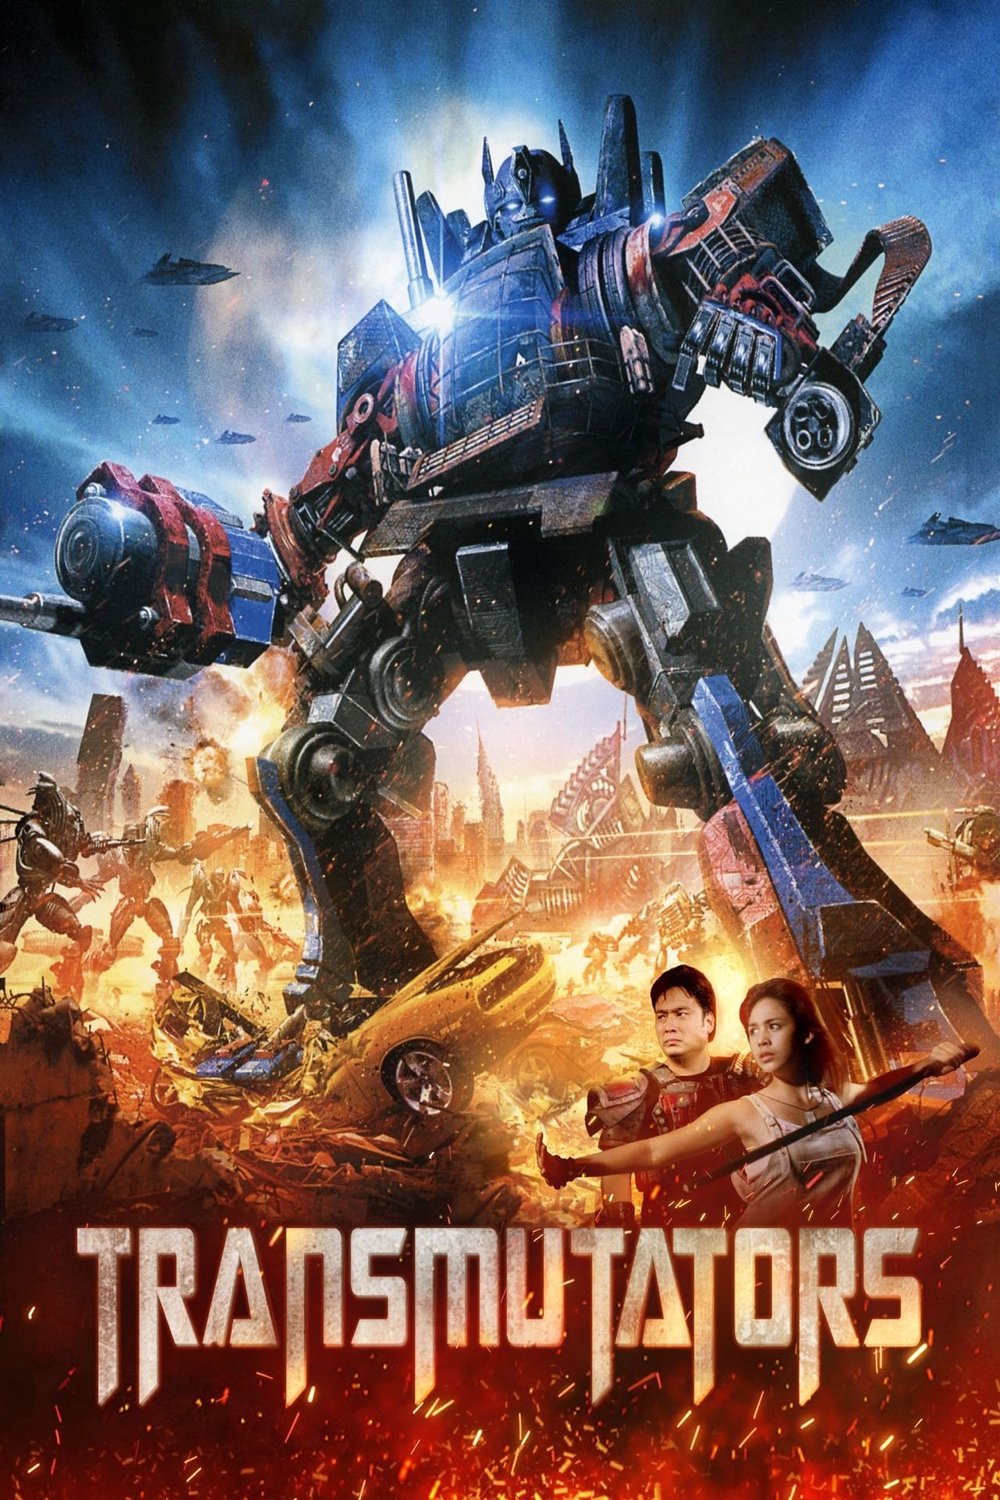 Poster of the movie Transmutators